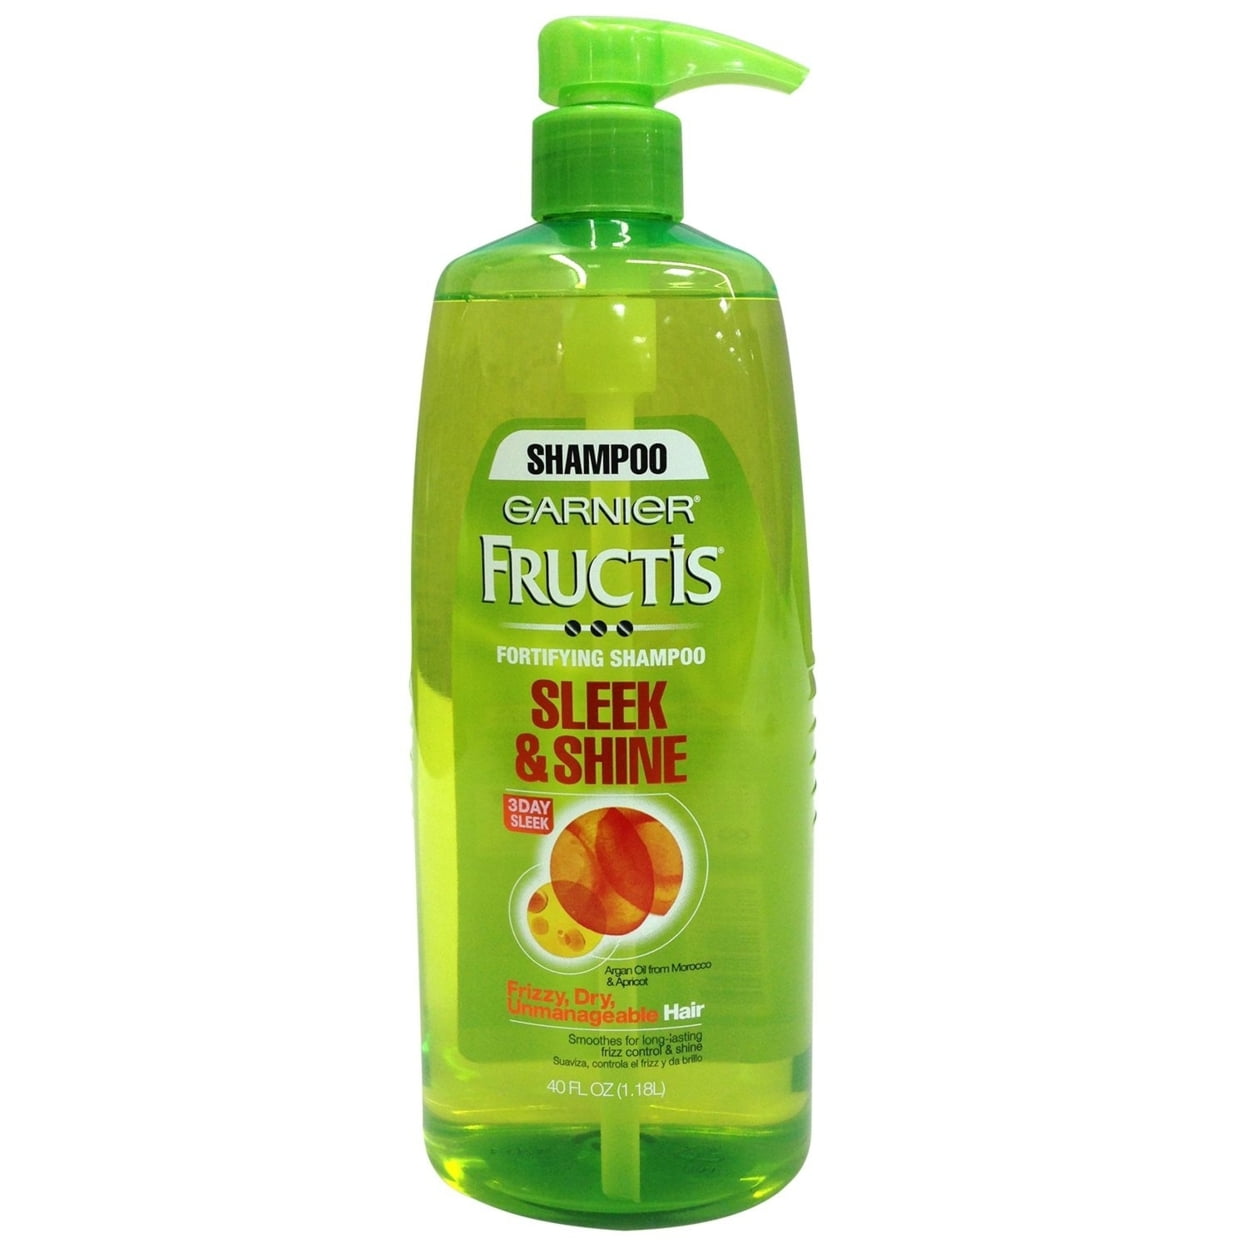 Garnier Fructis Shampoo - Pump - 40 Ounce